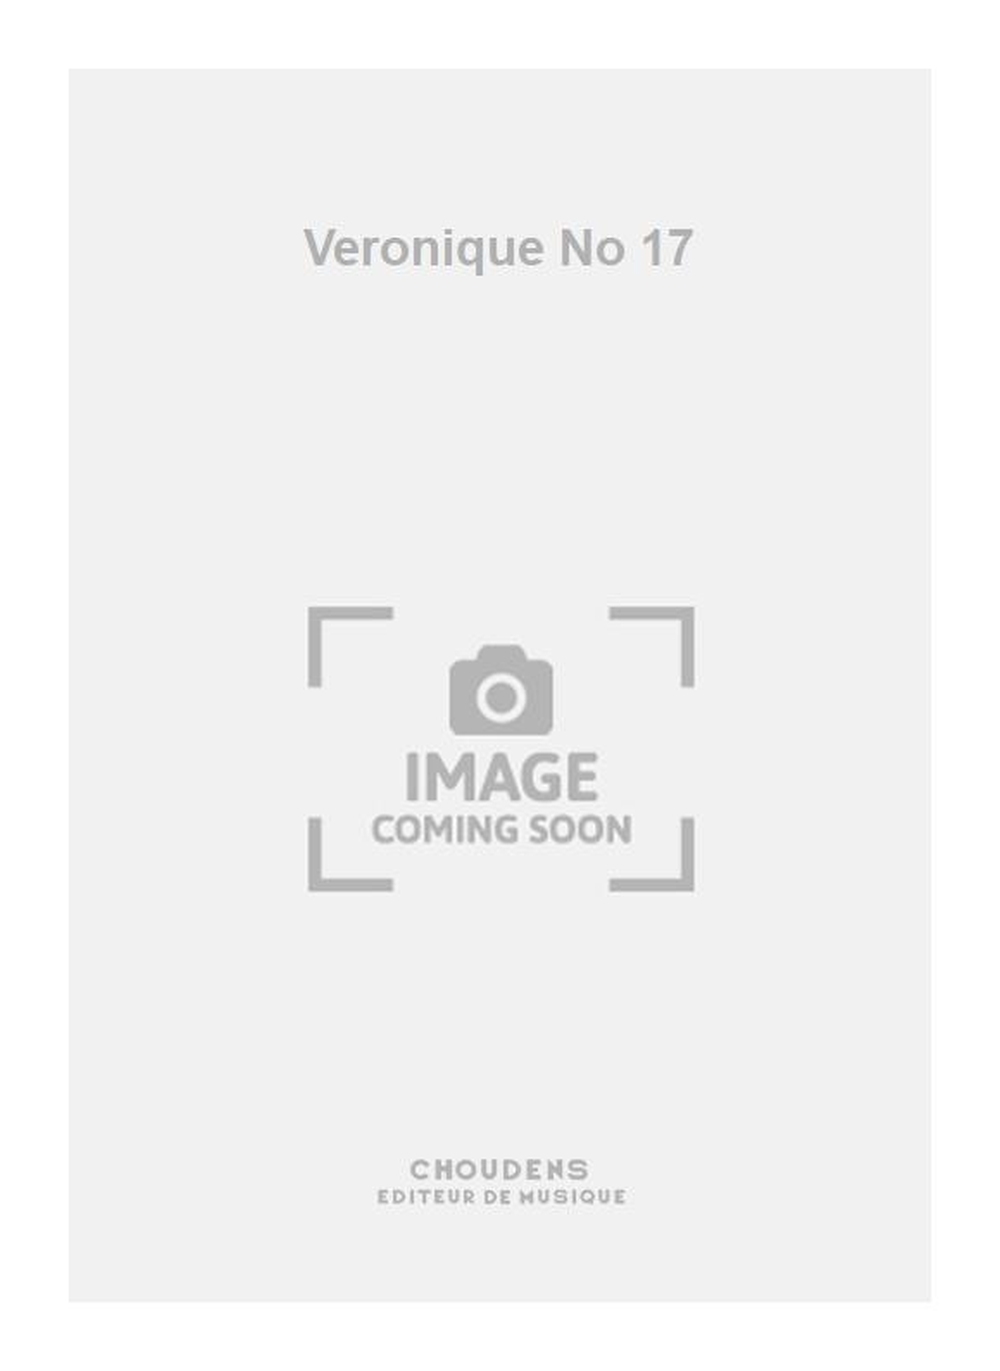 Messager: Veronique No 17